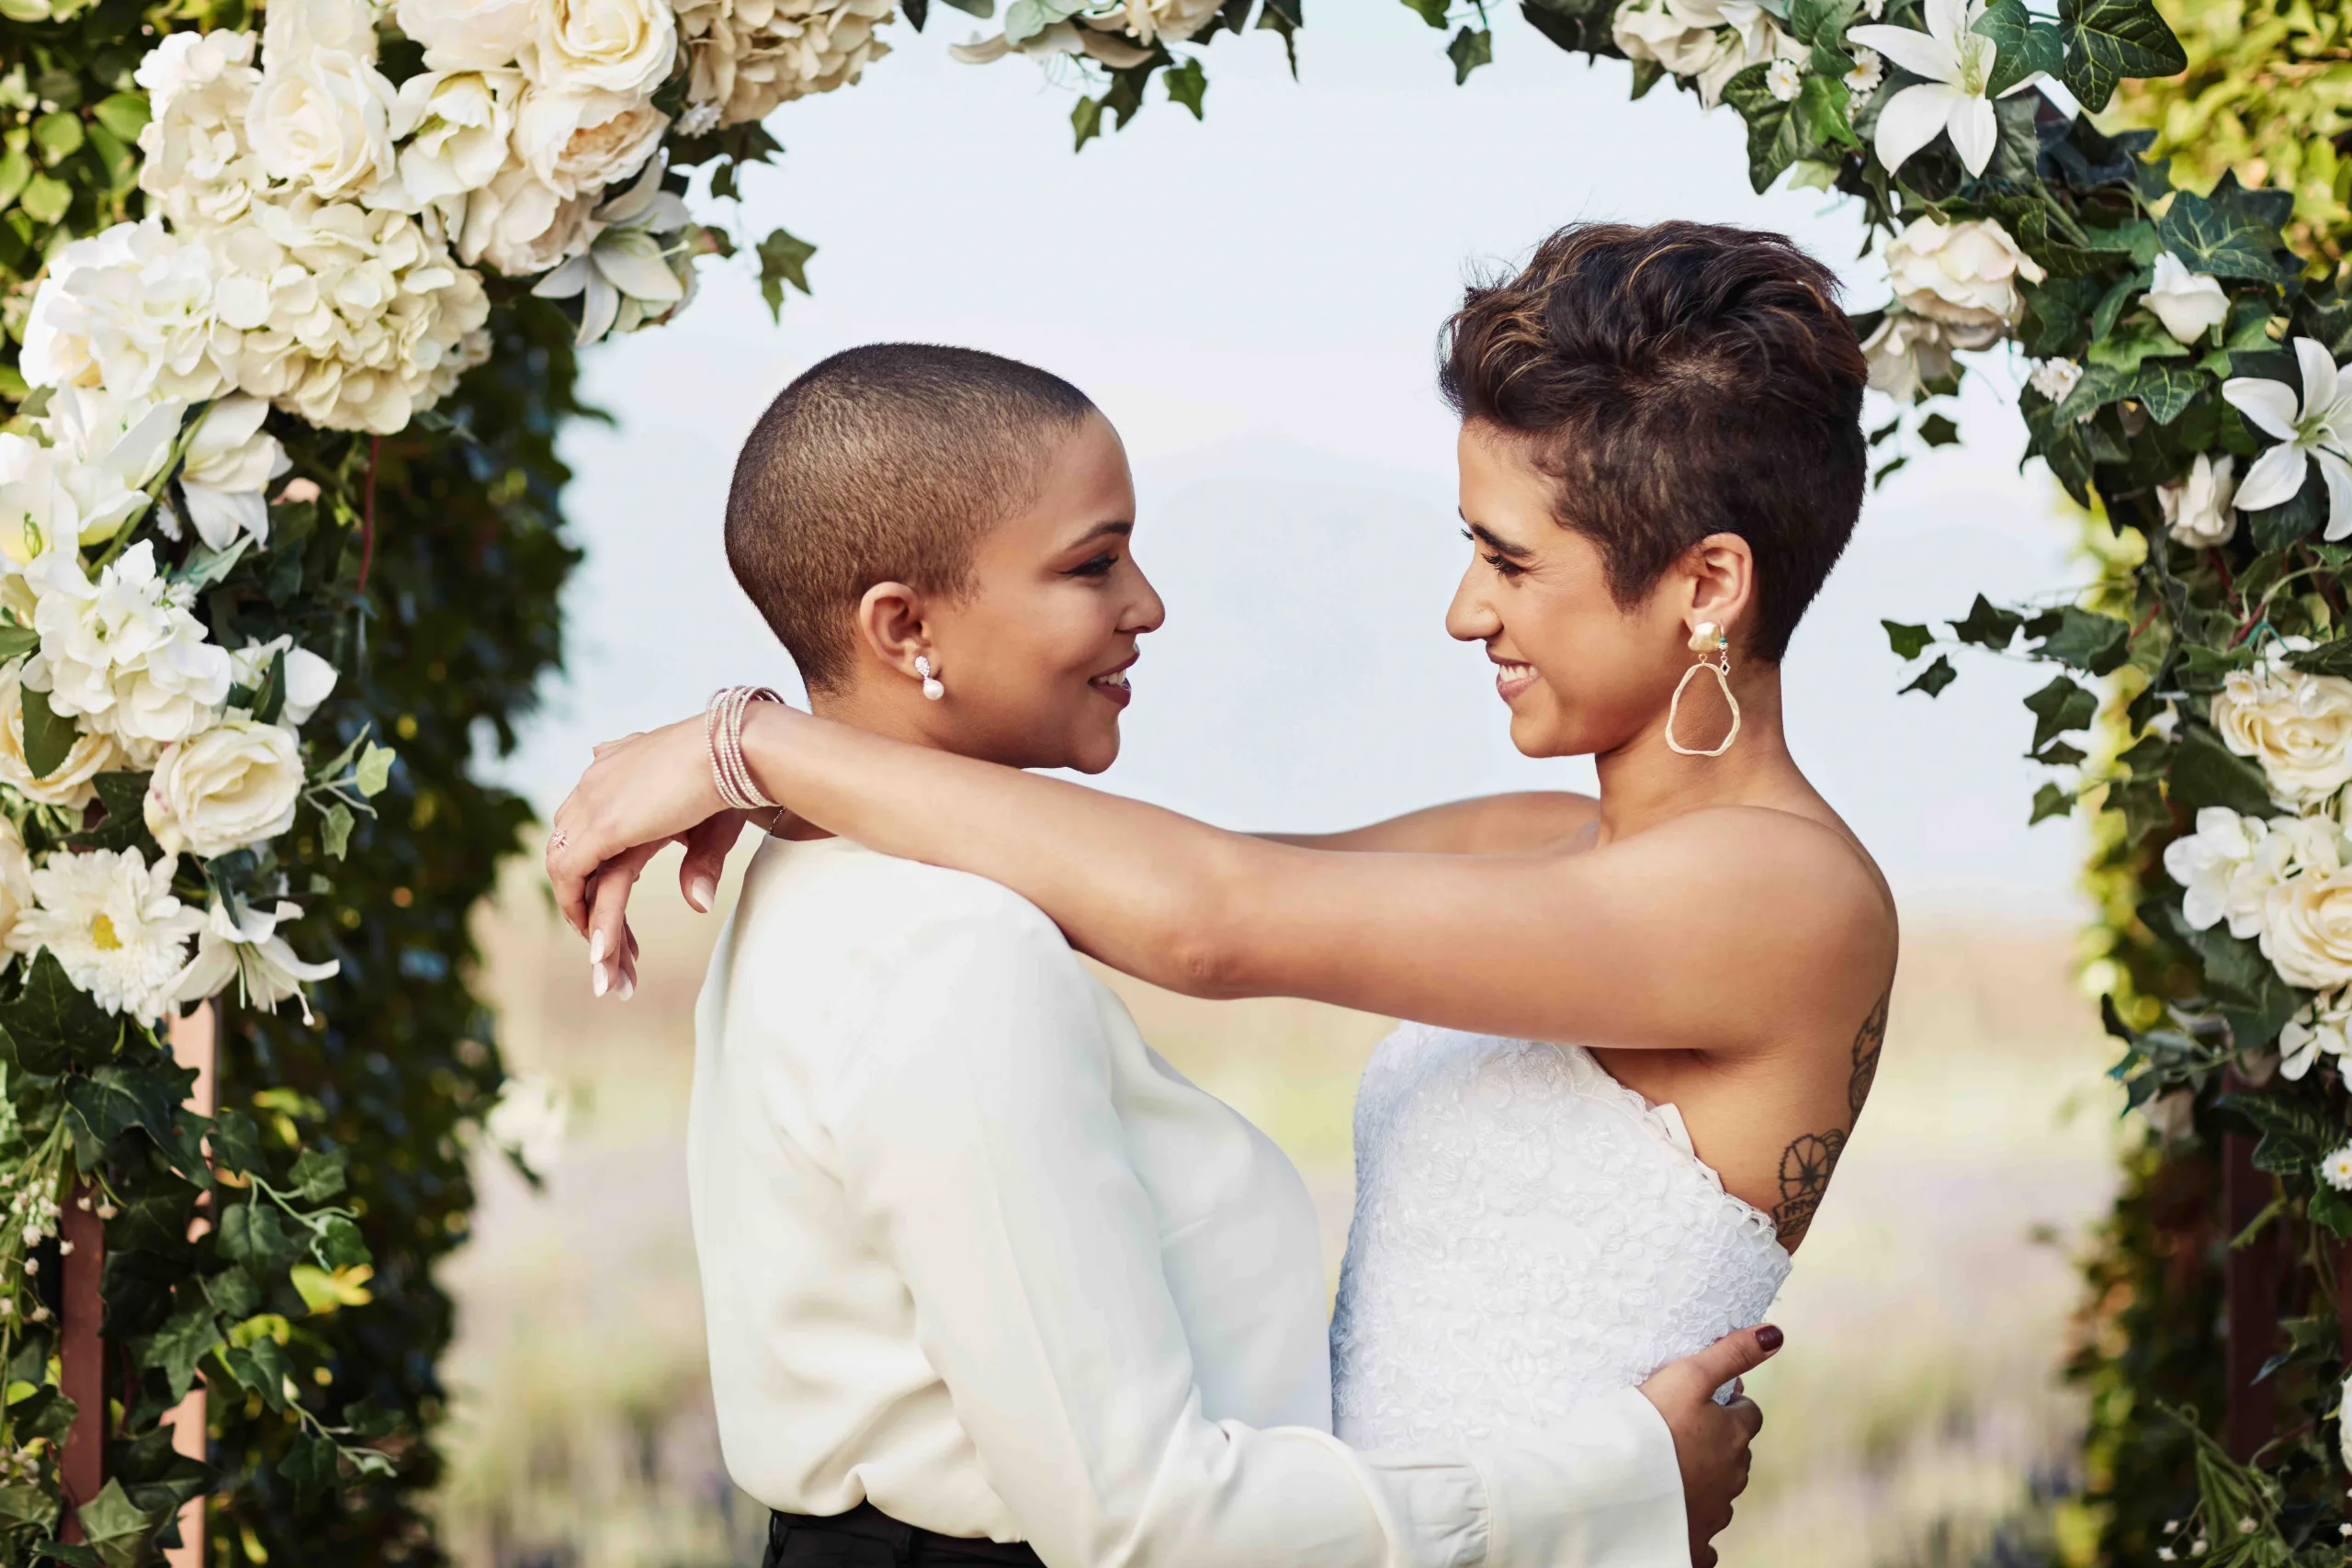 Mixed race lesbian couple wedding day